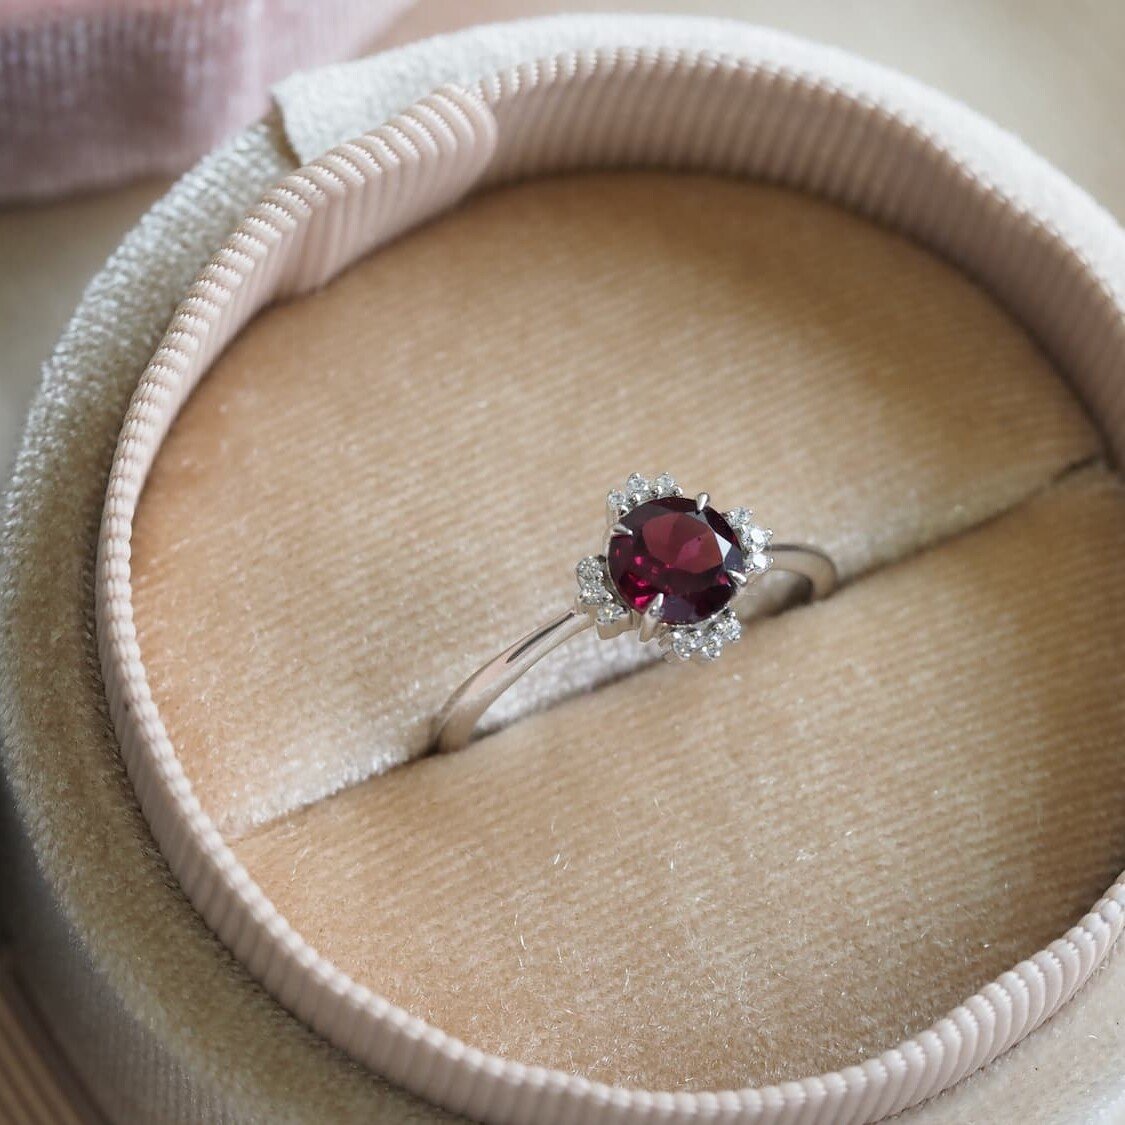 Chandelier red garnet engagement ring